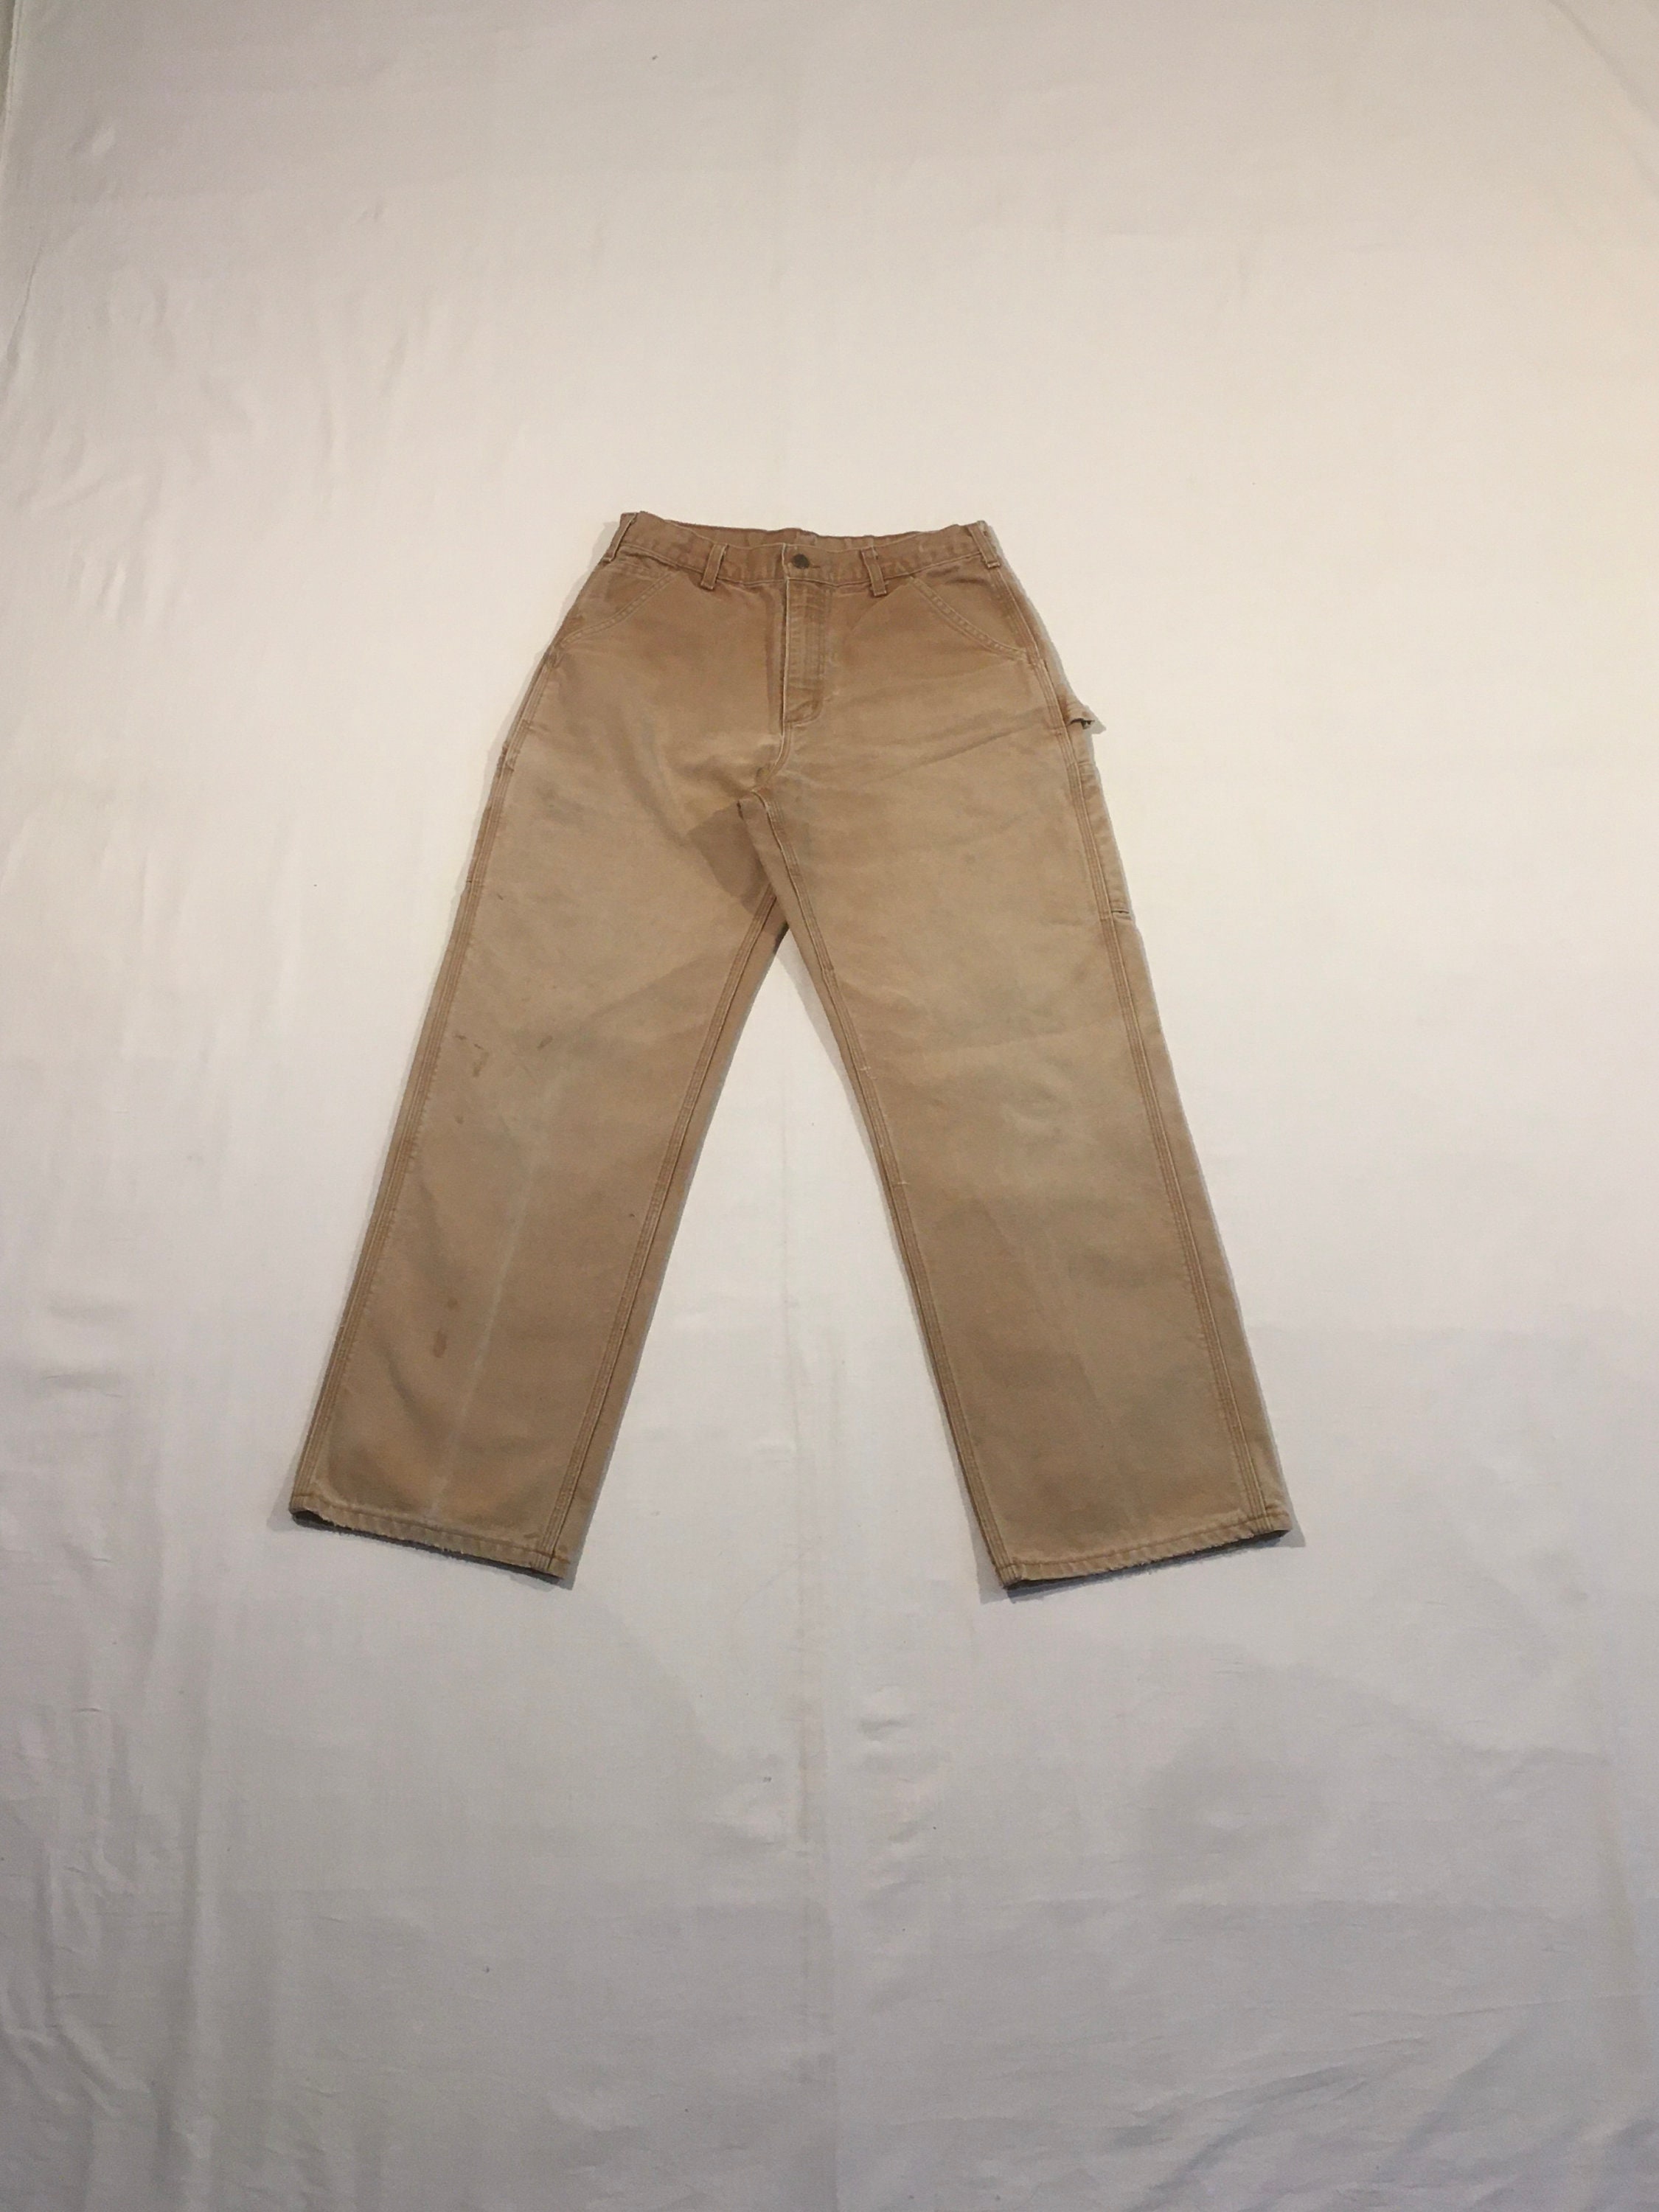 Vintage Carhartt mens pants 31x30 6 pocket pants.